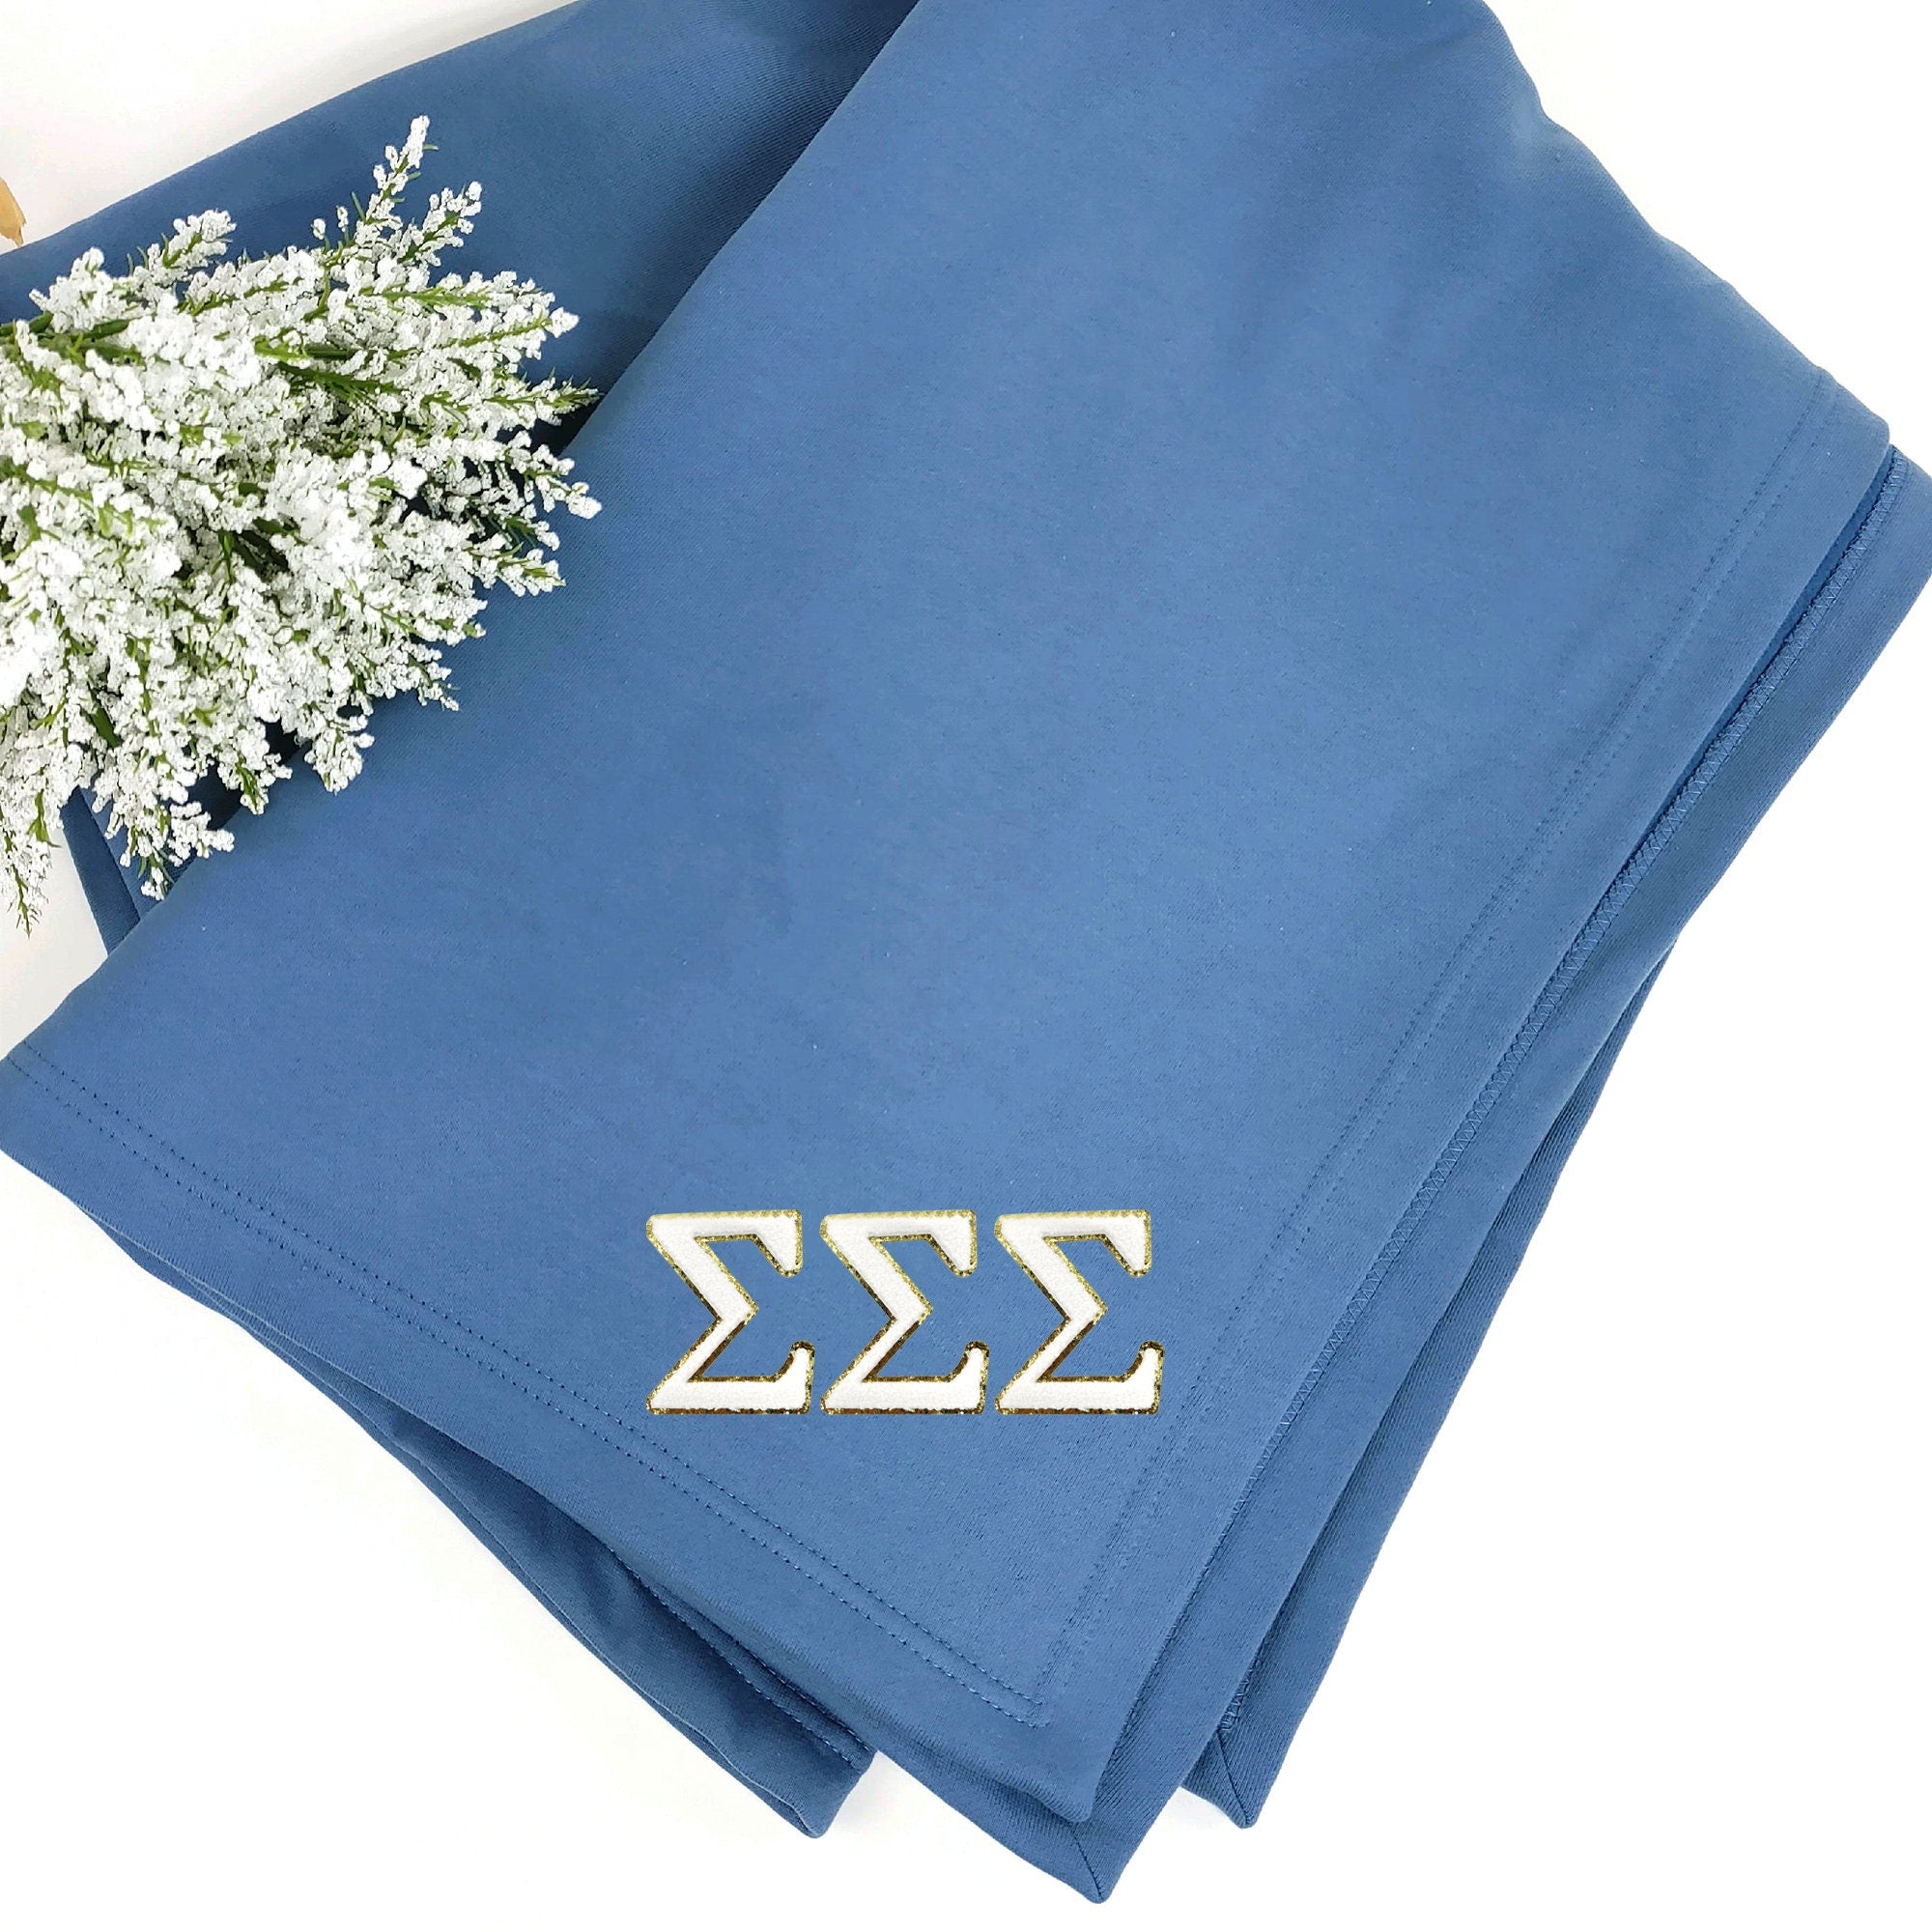 Sigma Sigma Sigma Patch Sweatshirt Blanket, Warm and Soft, Perfect Sorority Gift